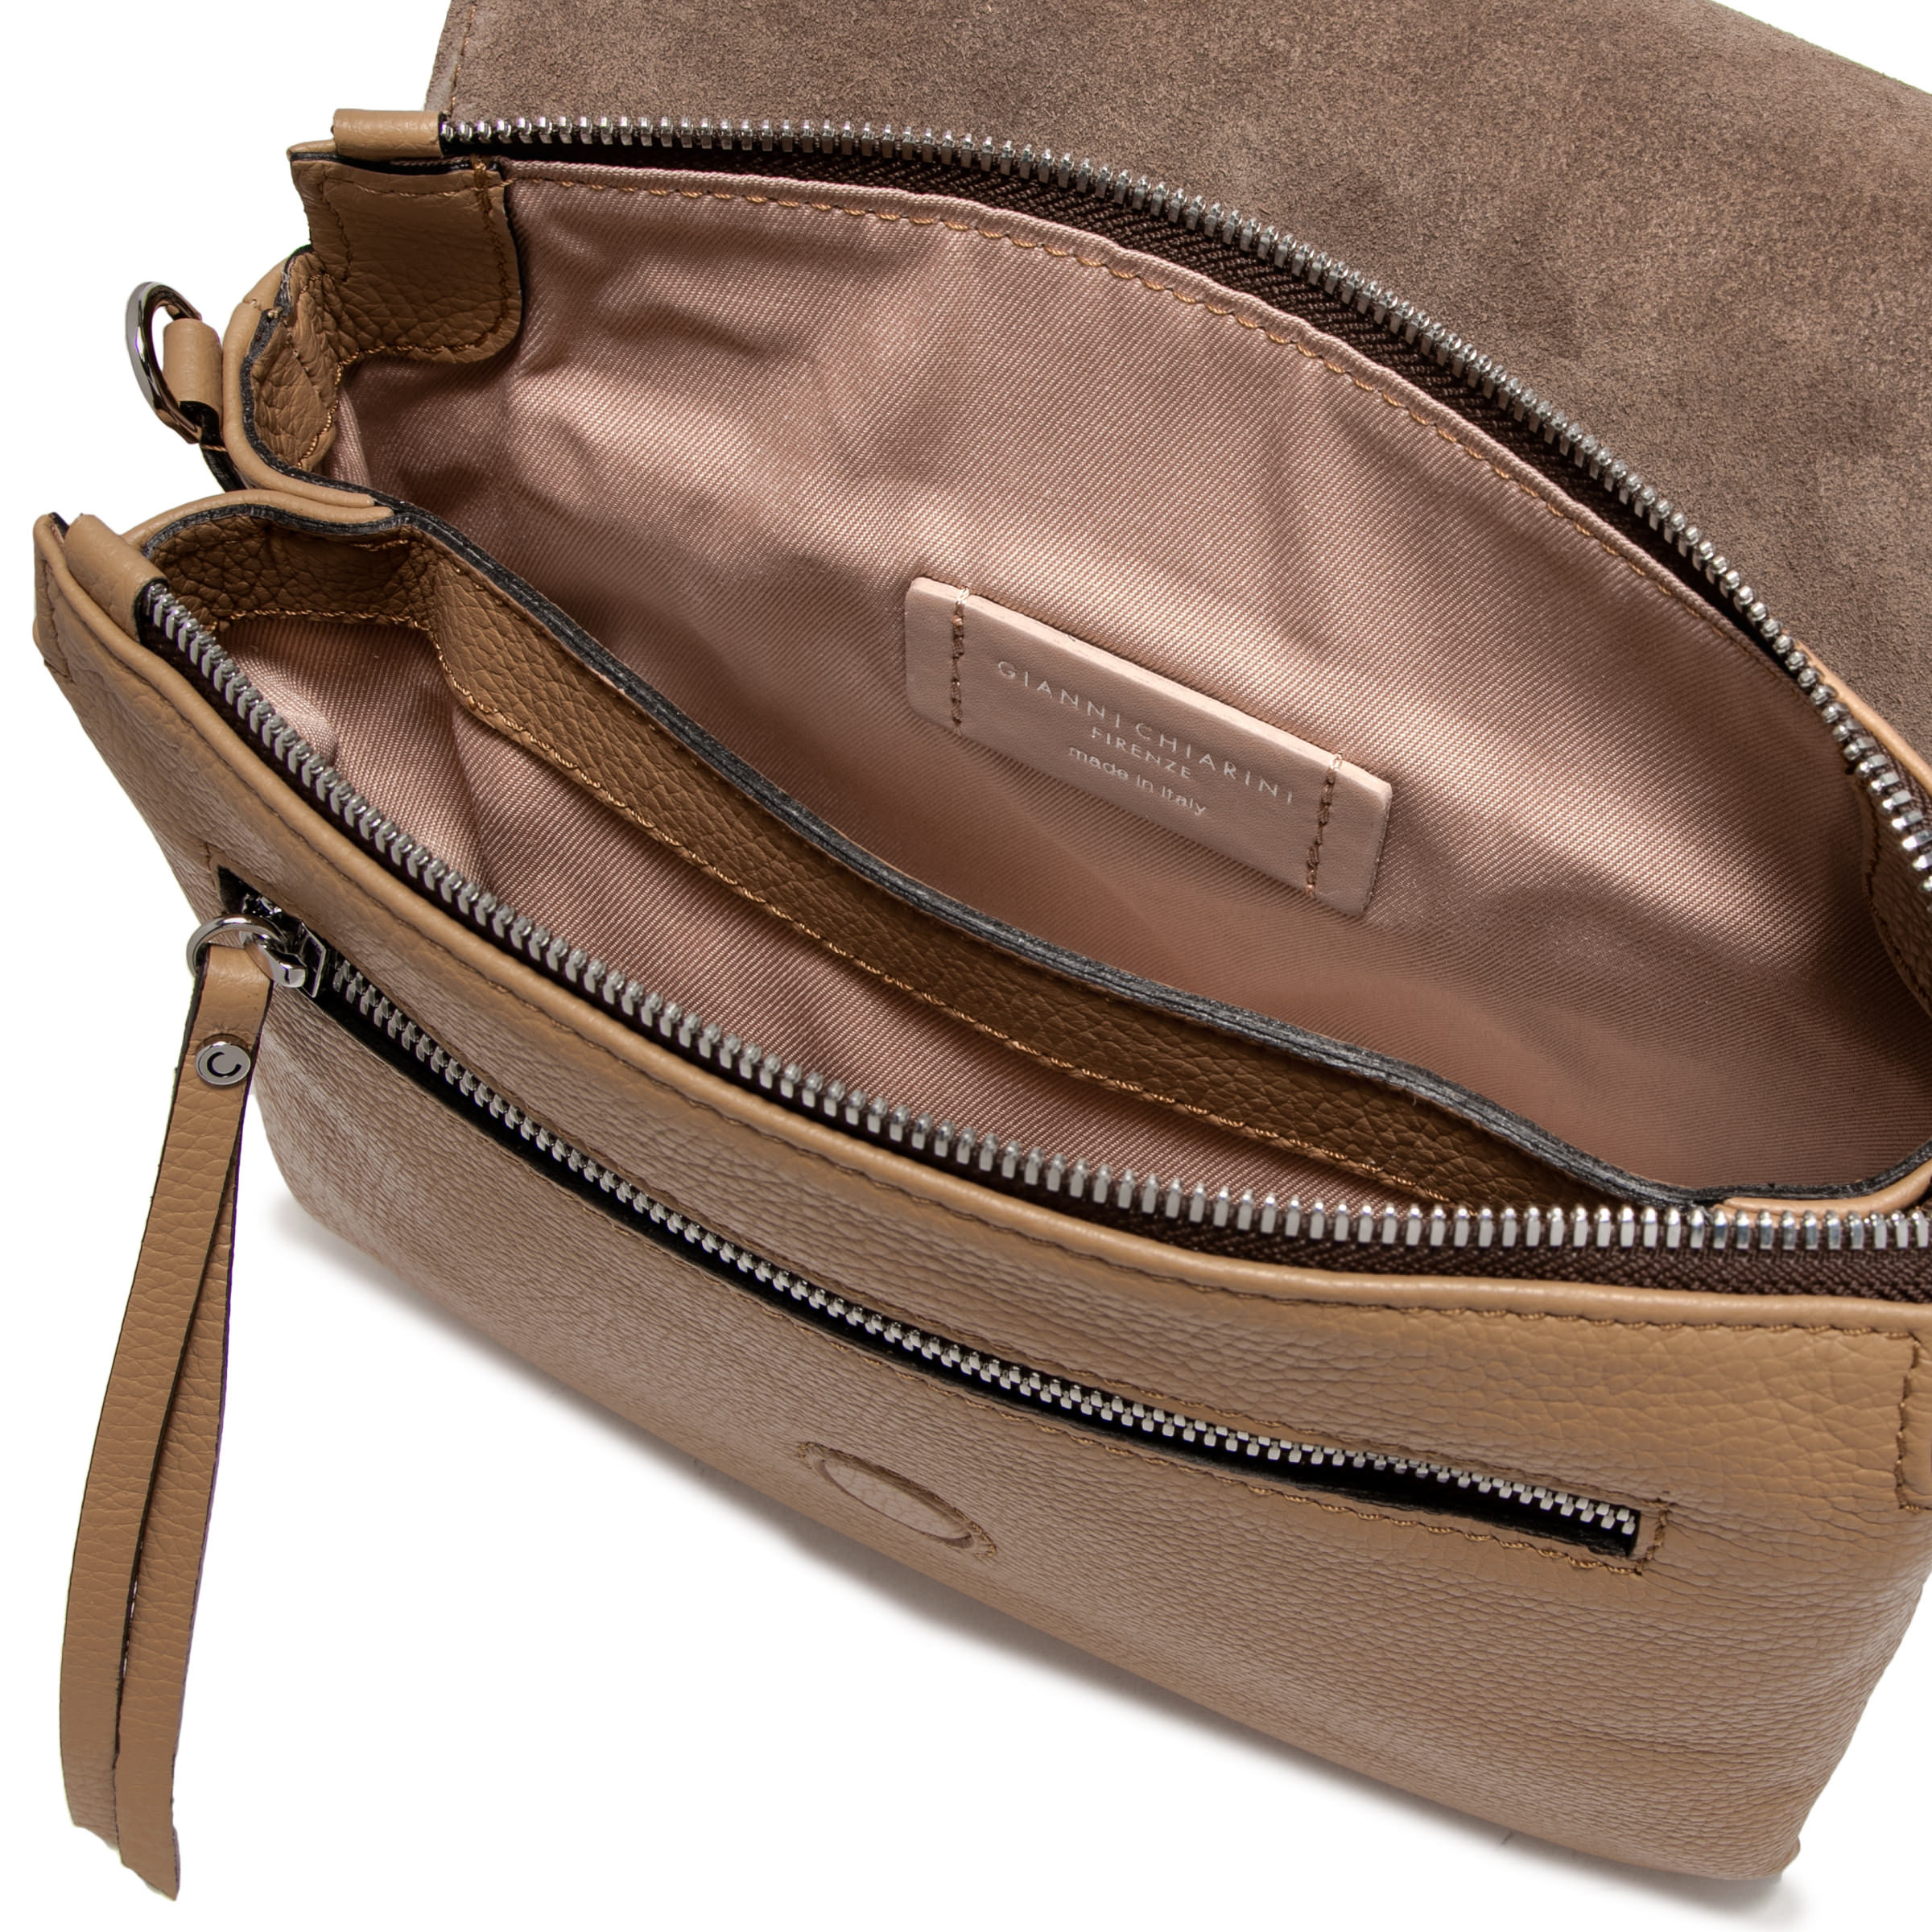 Gianni Chiarini - Three leather bag, Natural, large image number 4